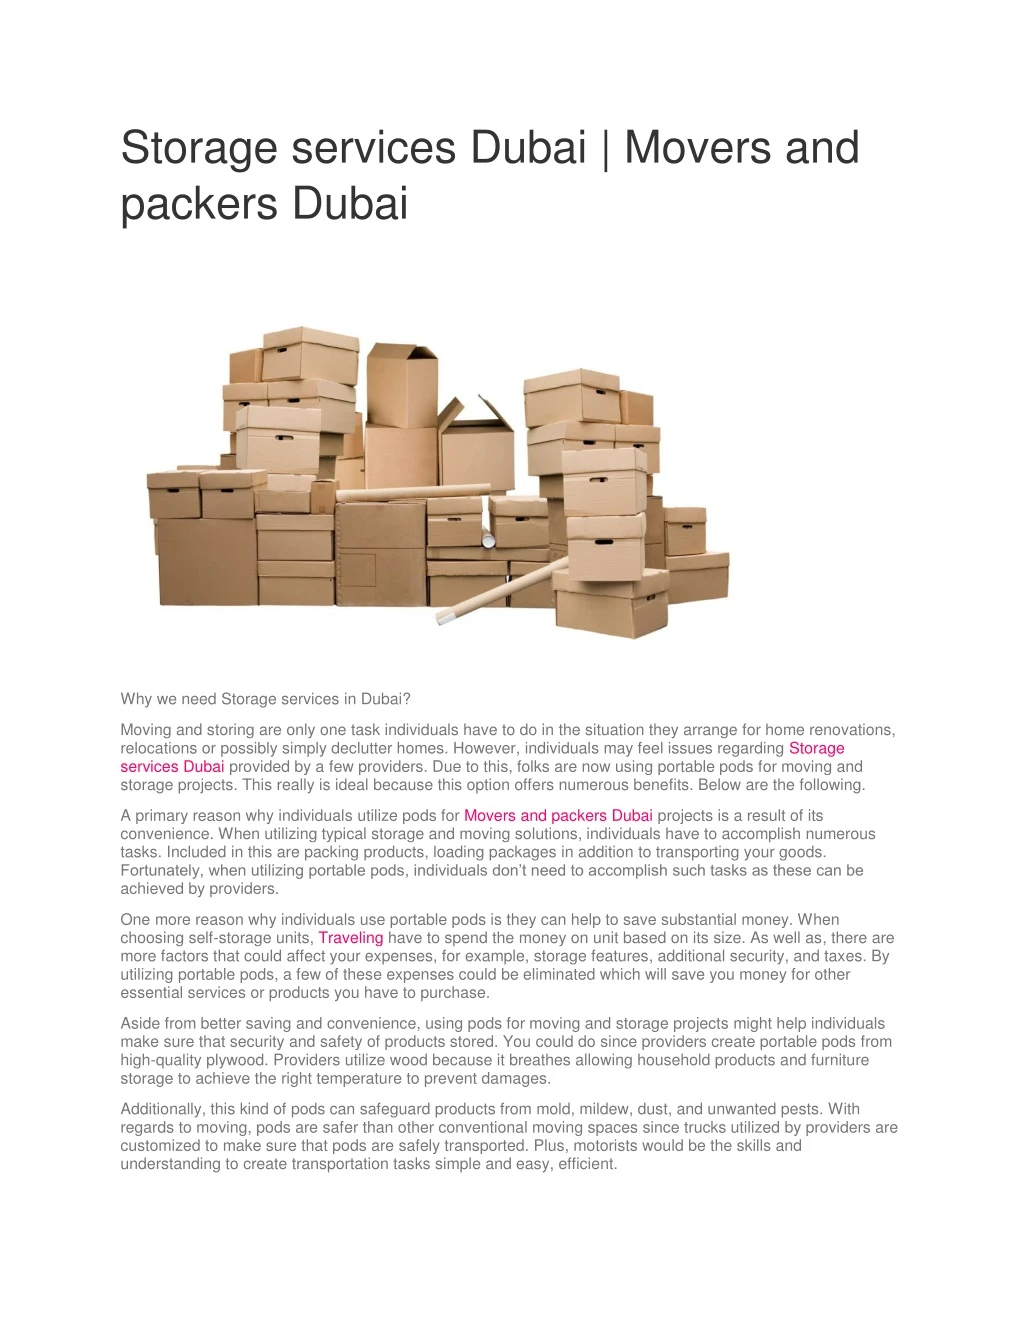 storage services dubai movers and packers dubai